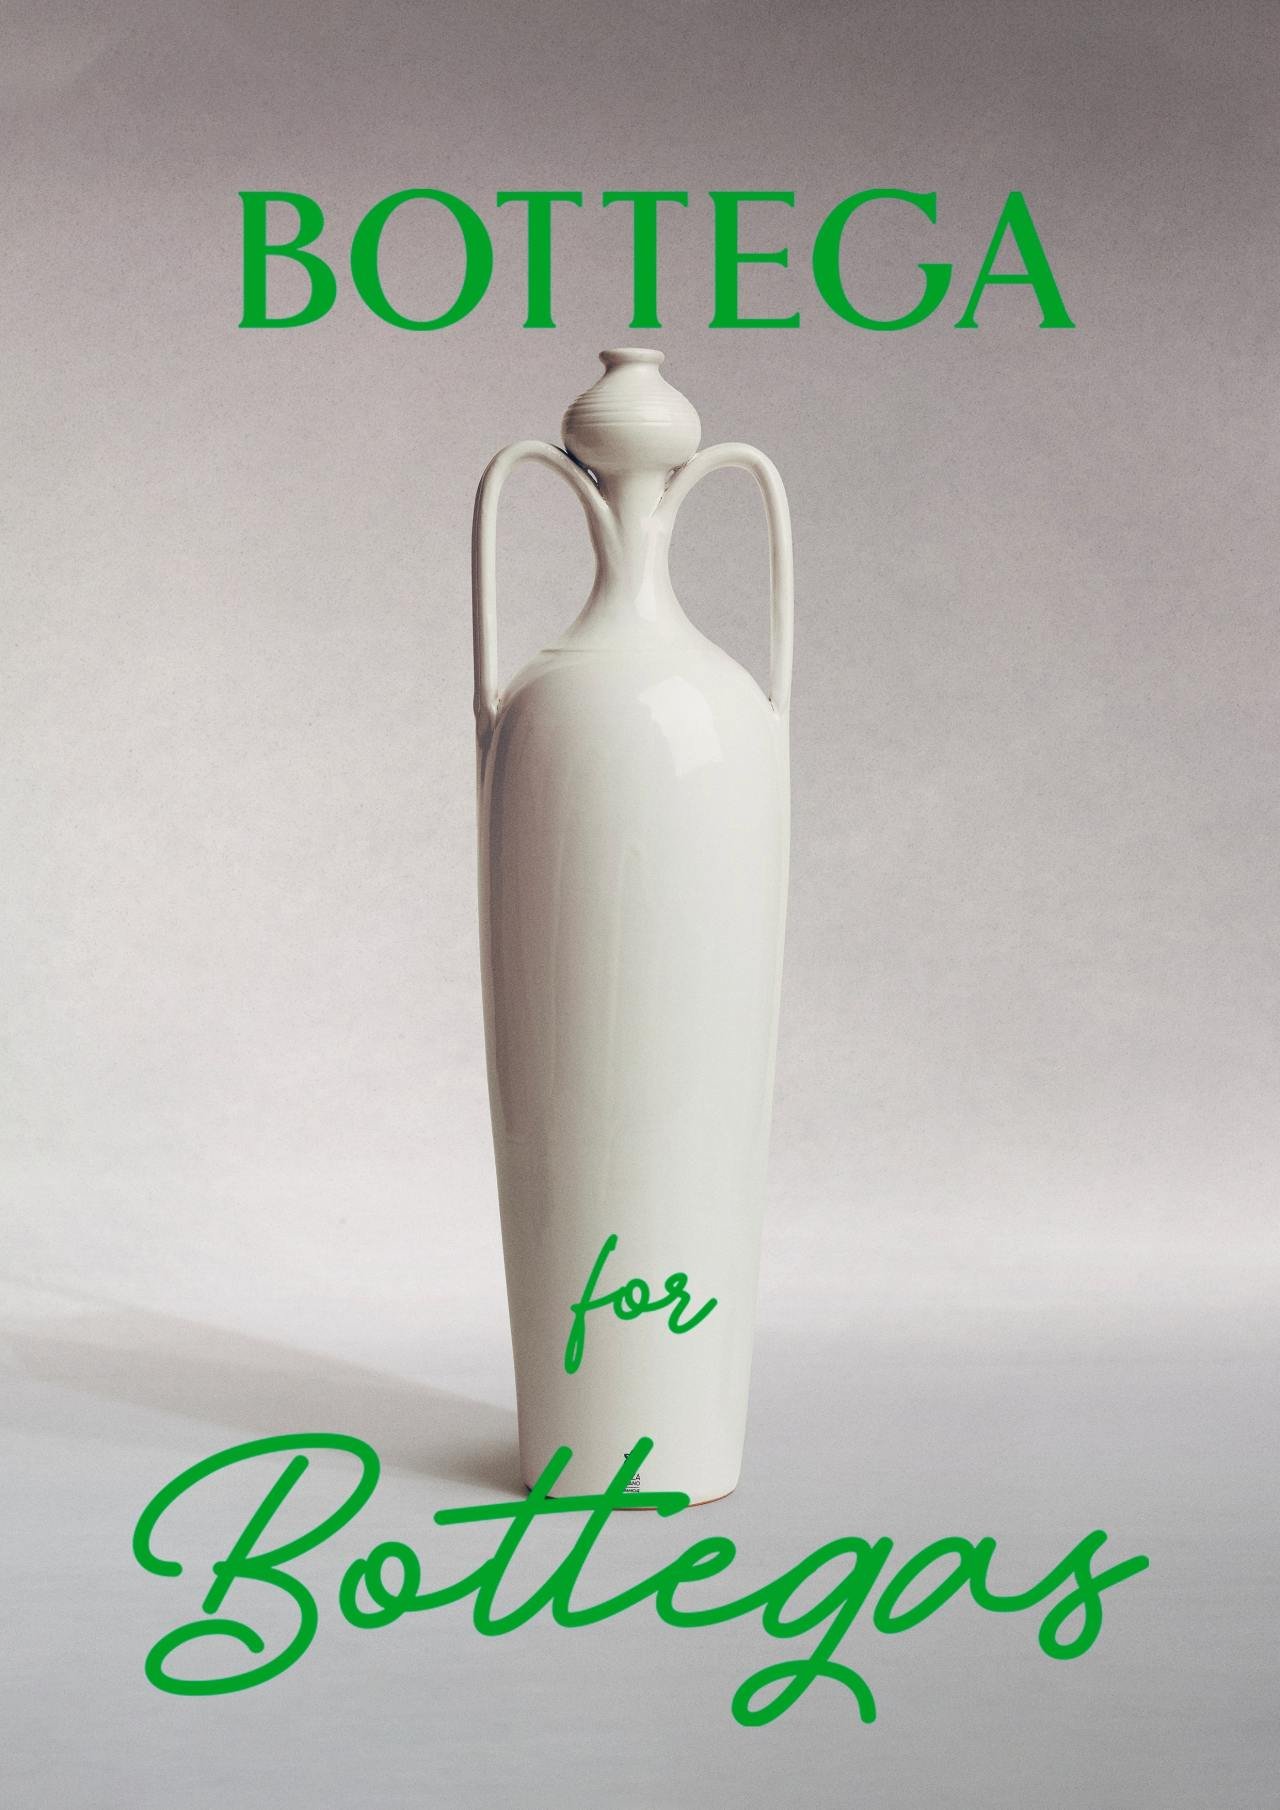 Bottega for Bottegas